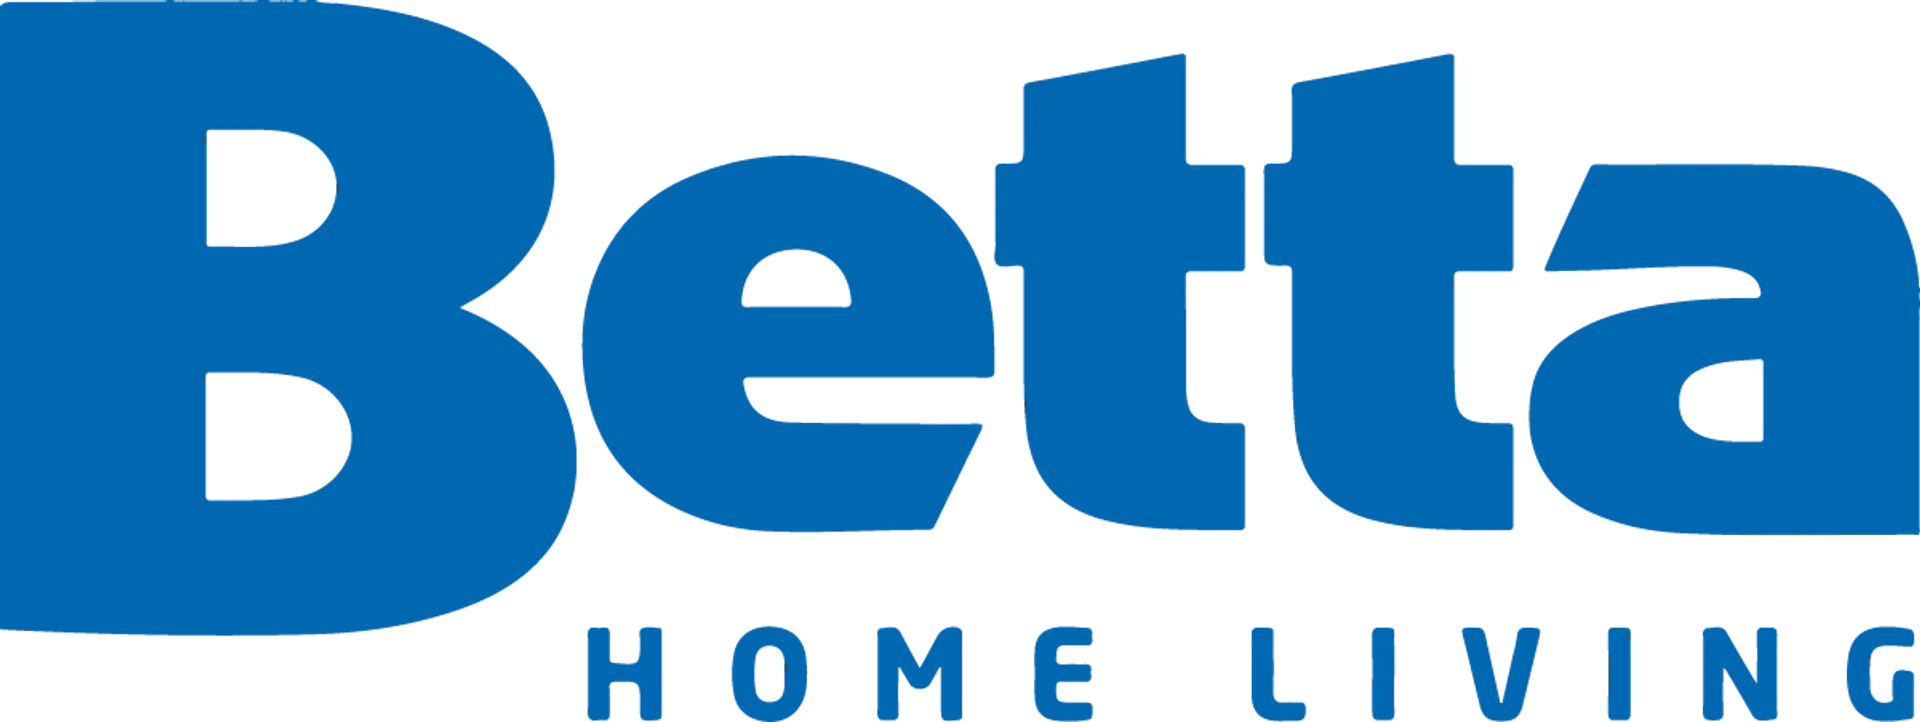 BETTA logo